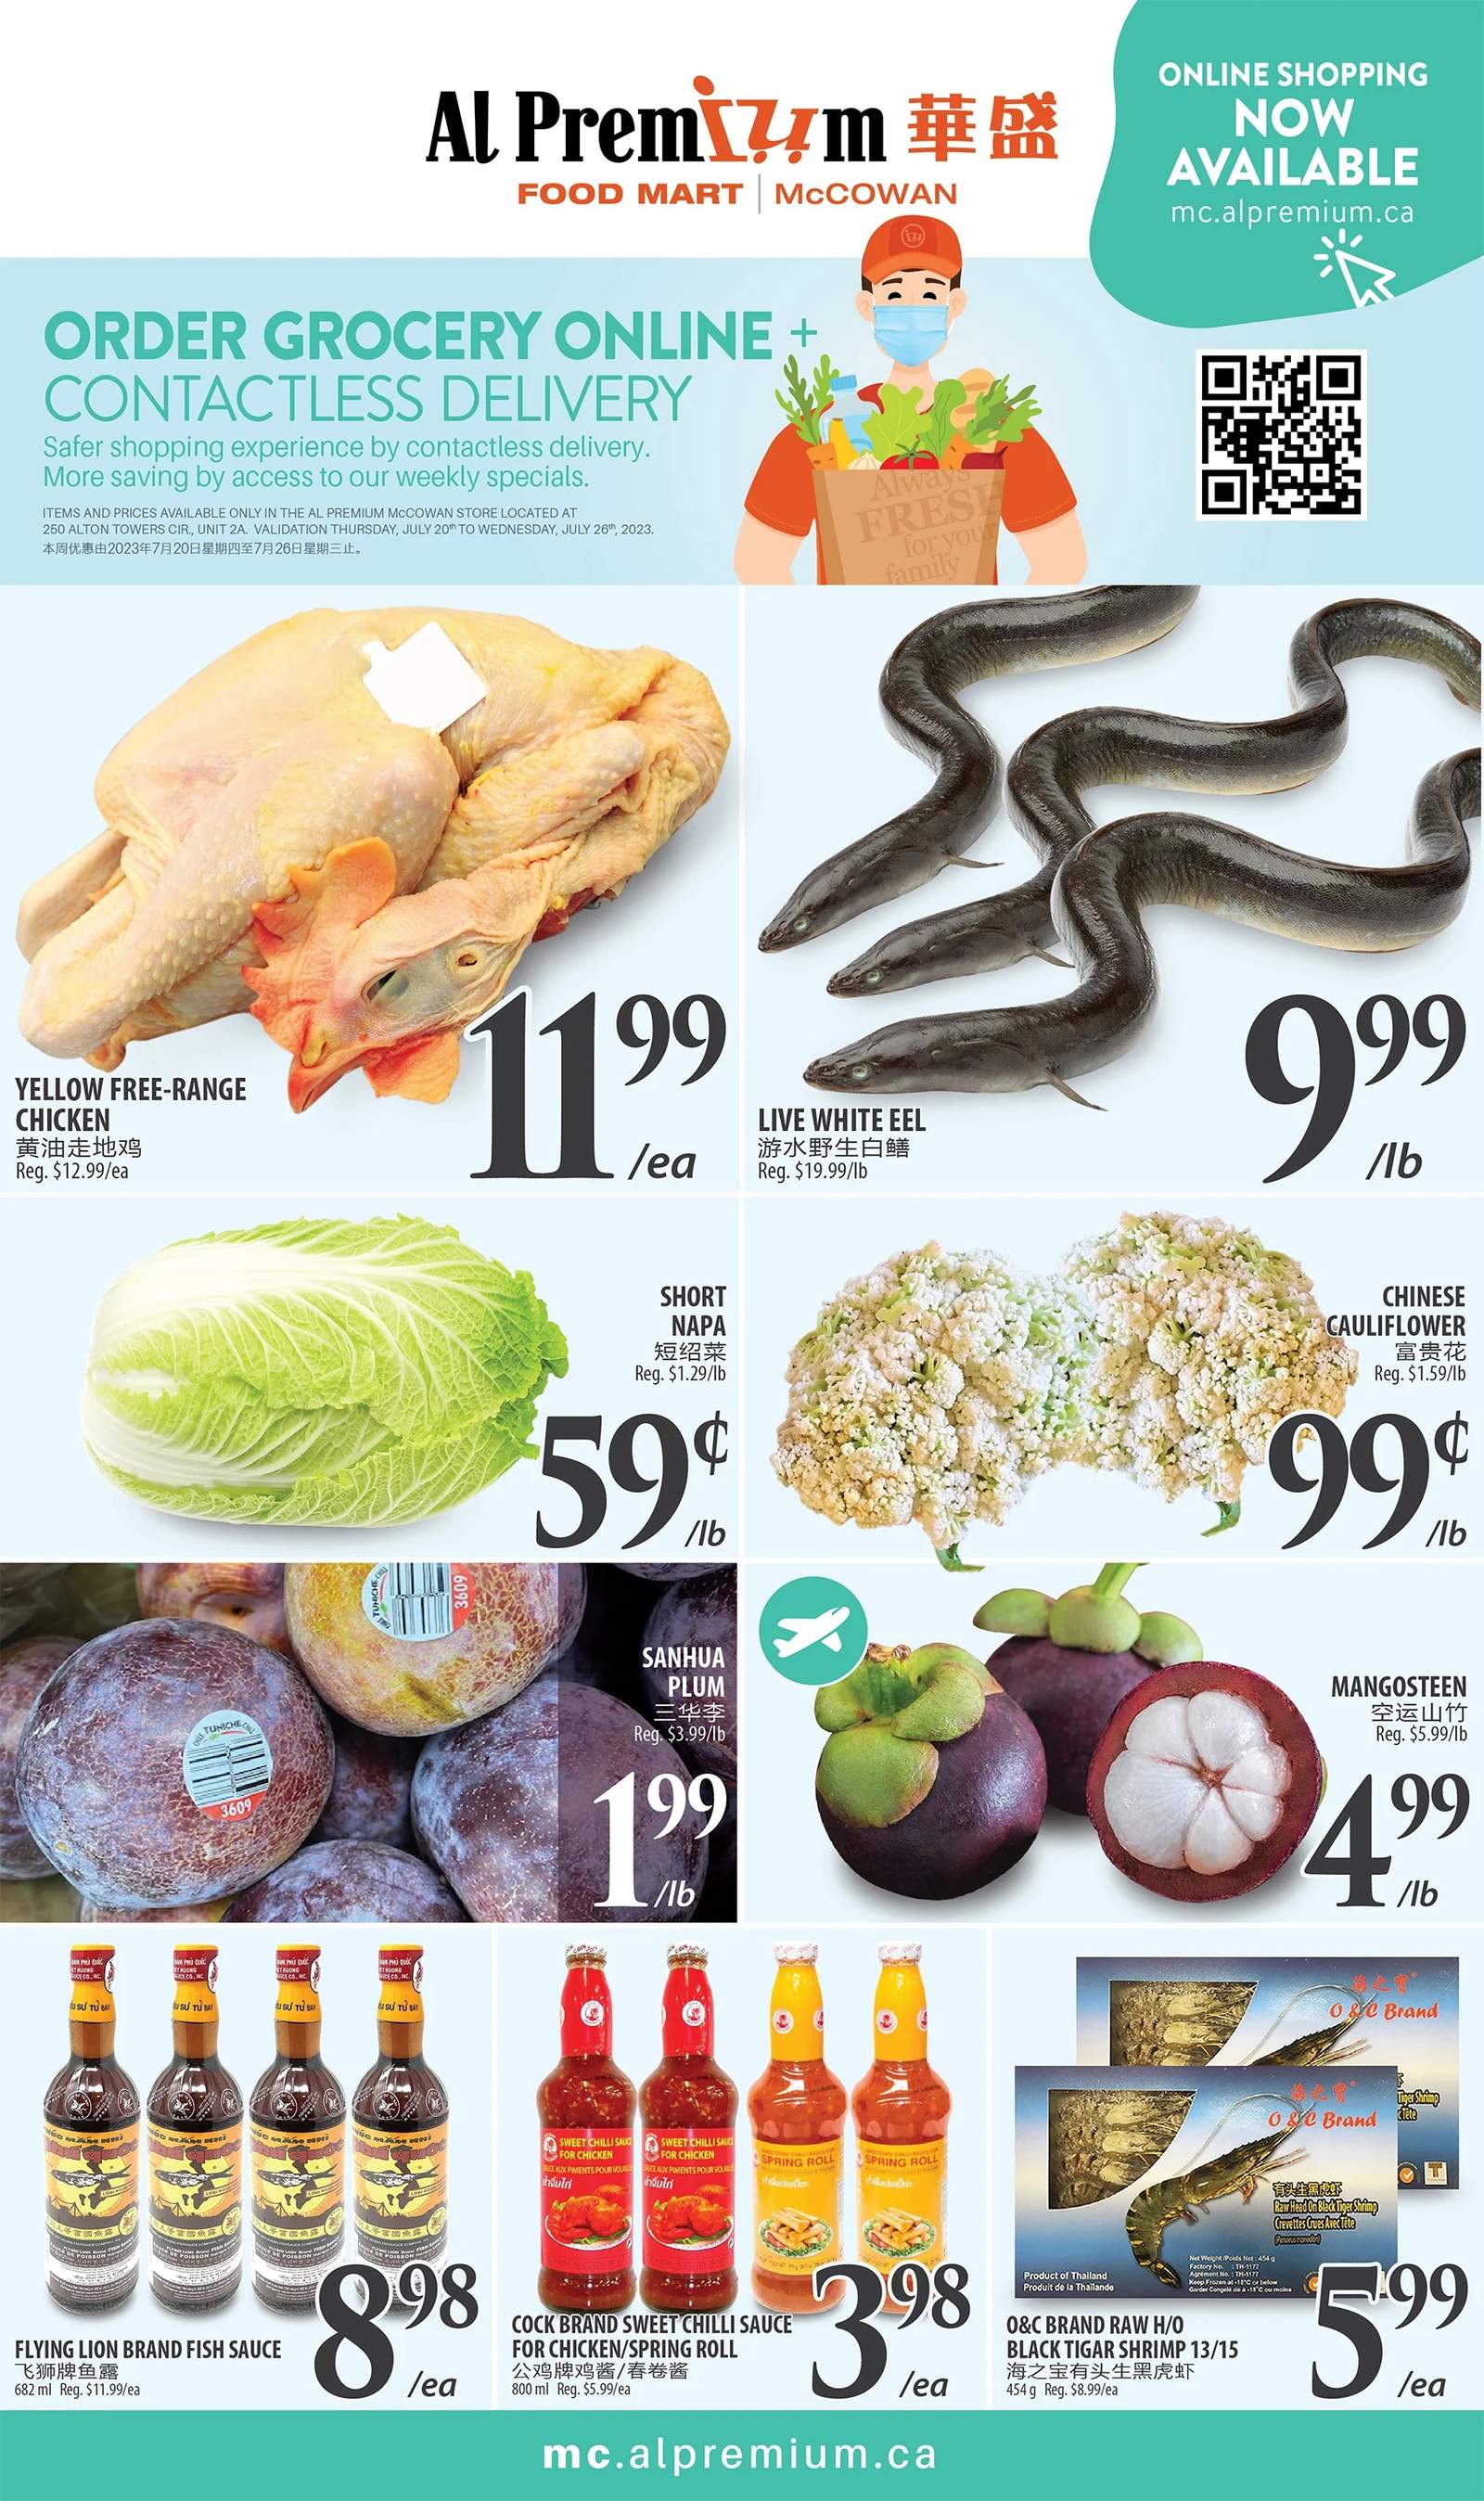 GREEN LEAF LETTUCE – Al Premium Food Mart - McCowan